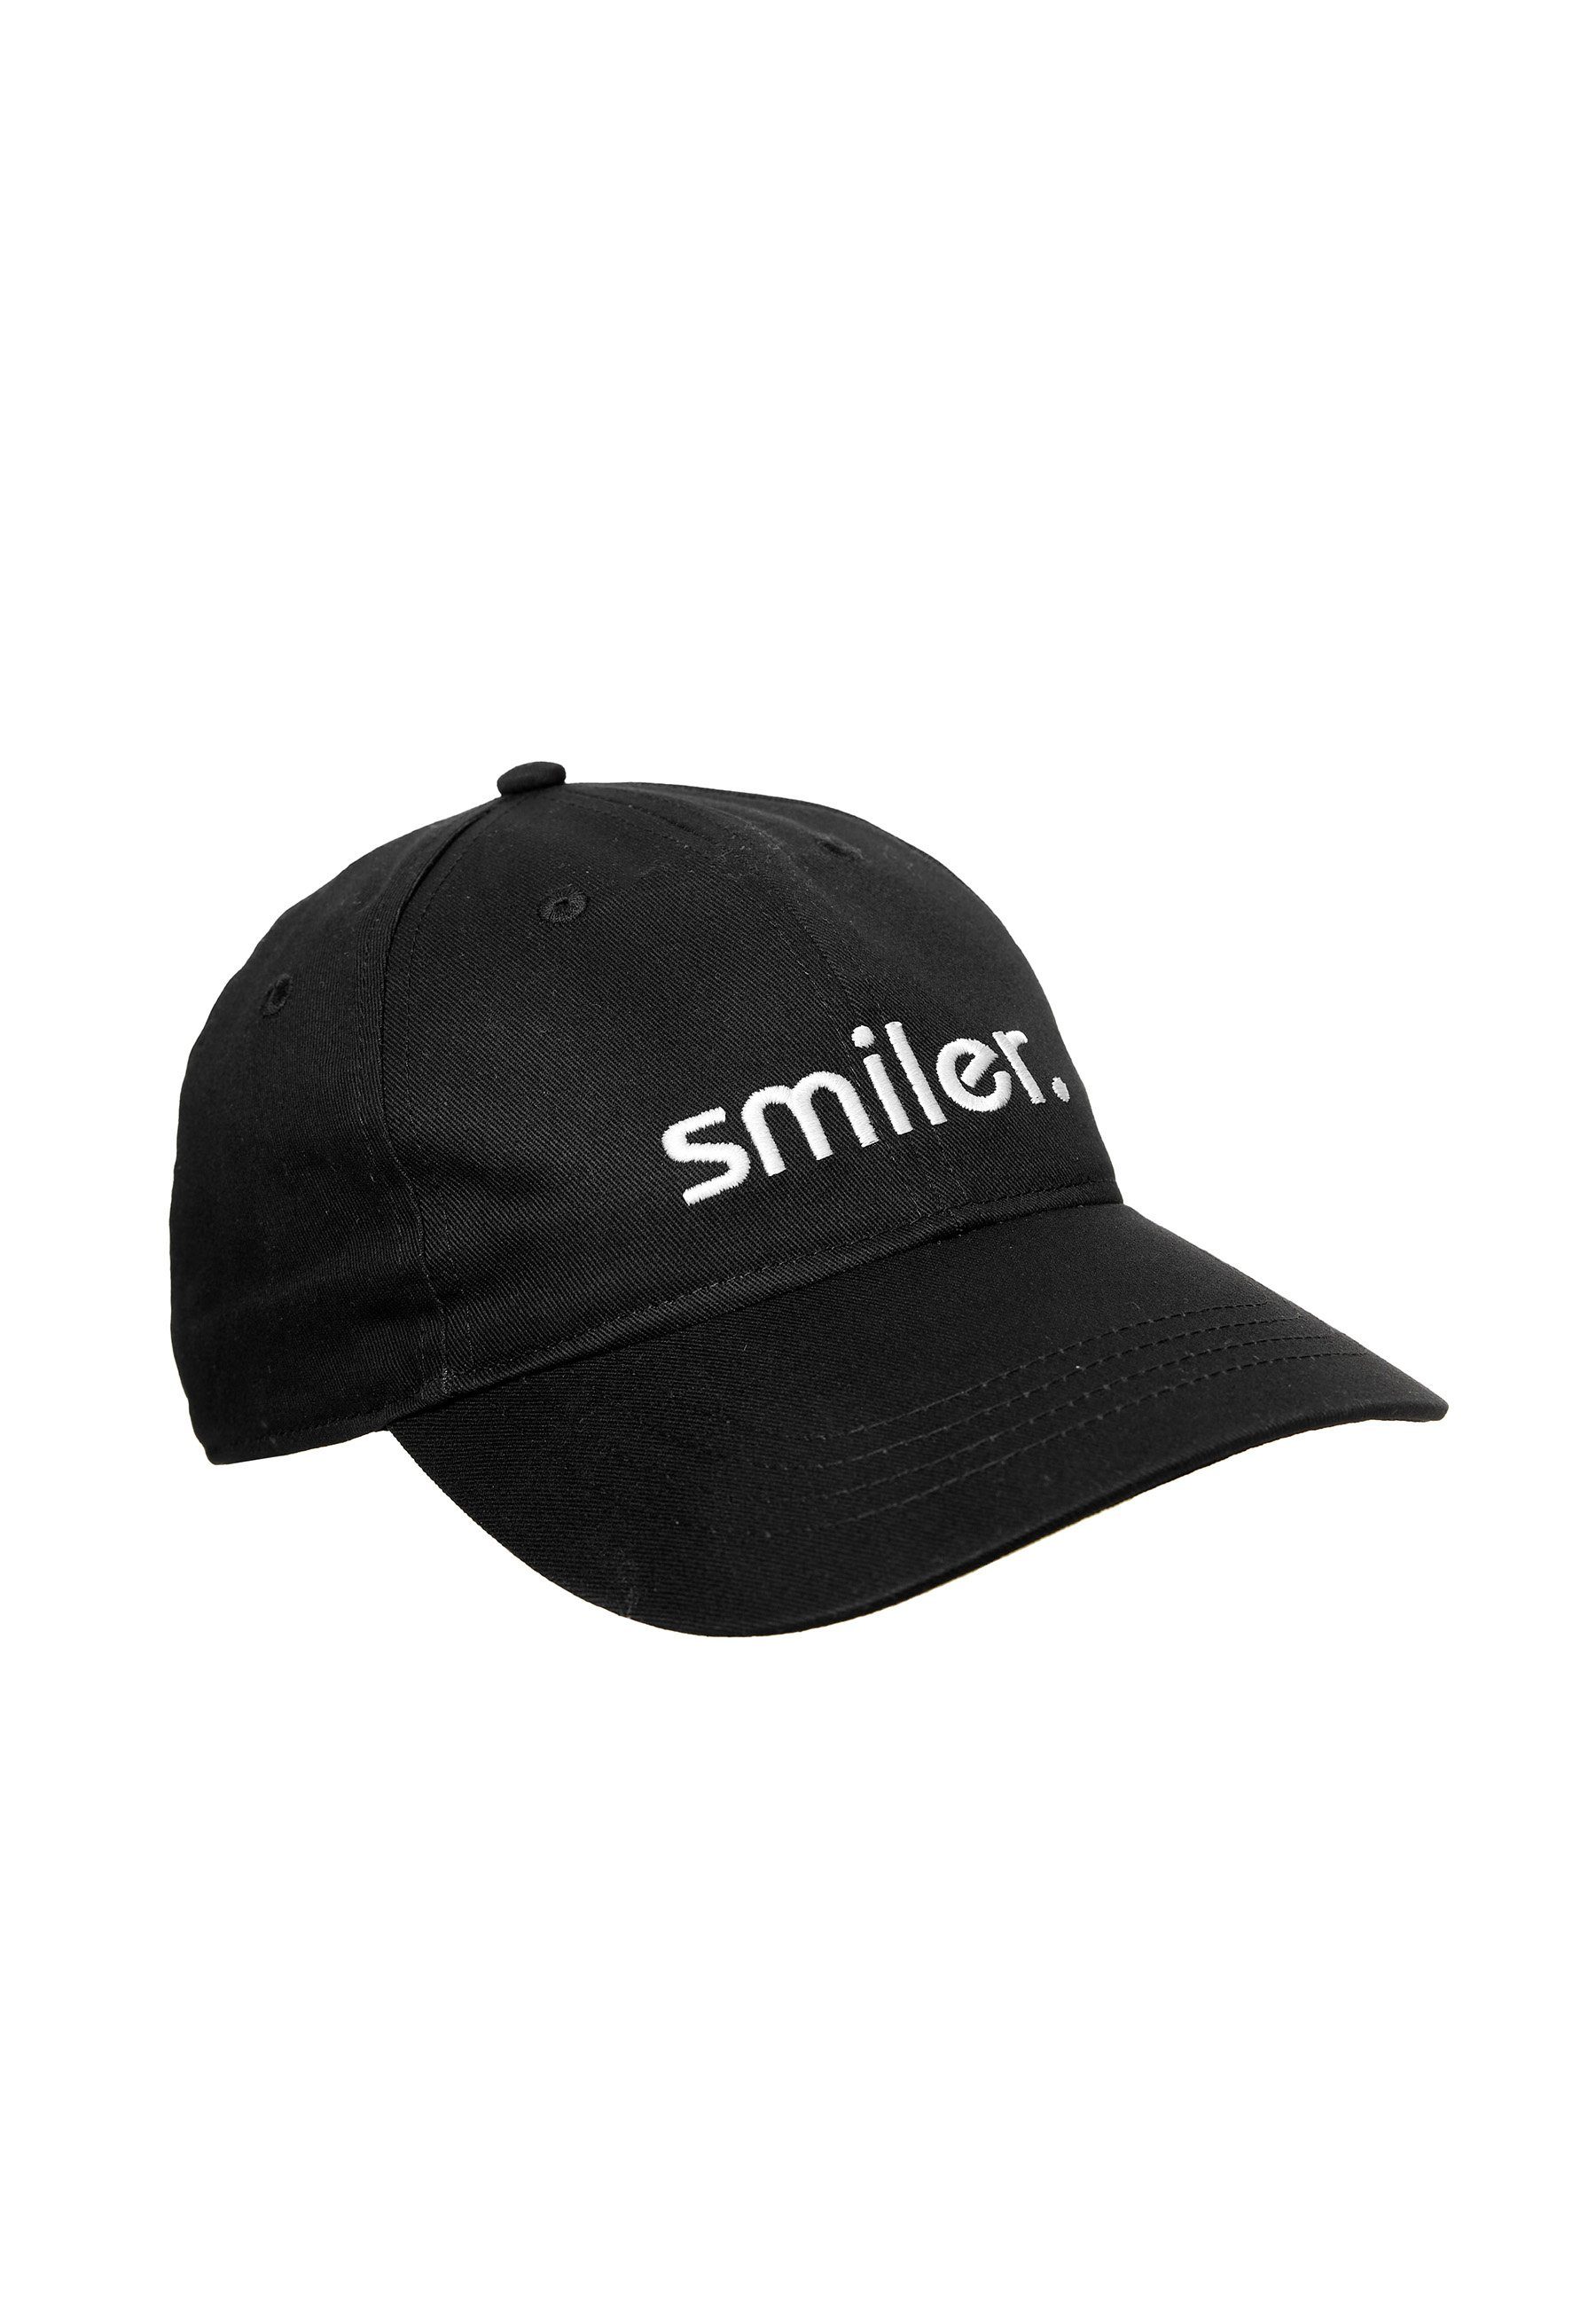 smiler. Baseball Cap mini-sunny. schwarz